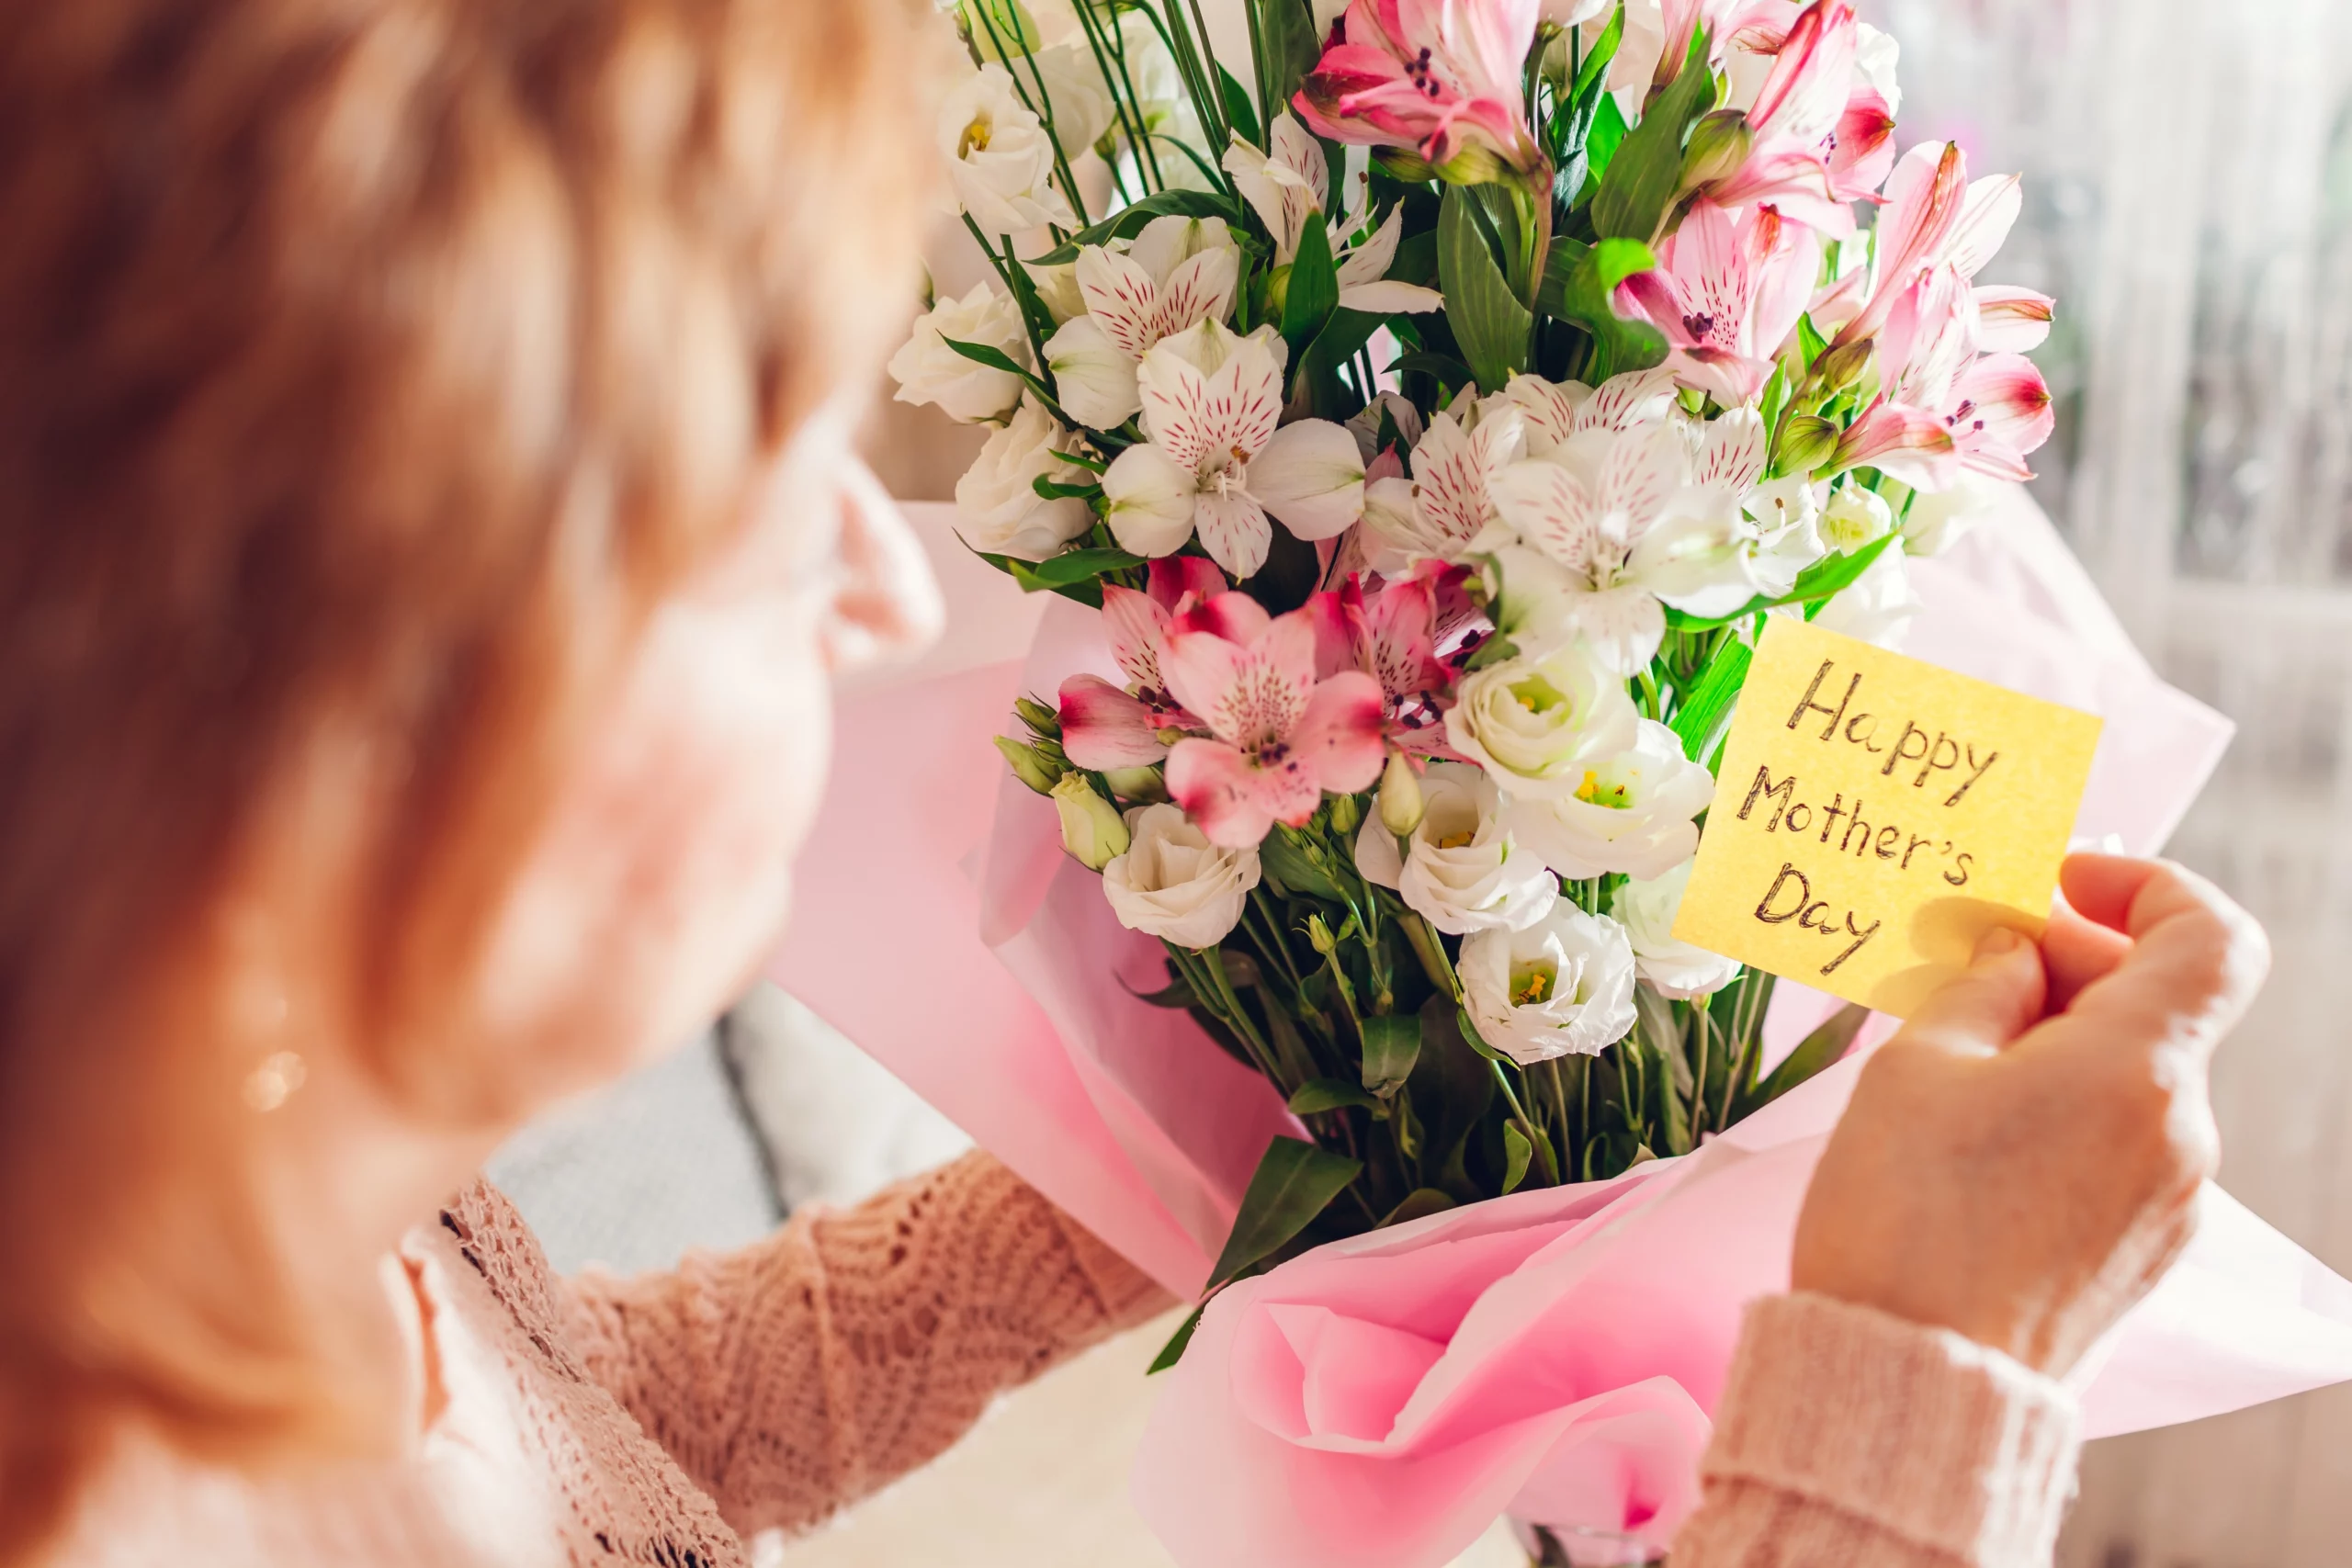 Last minute Mother's Day gift idea: send mystery flowers | Swoosh Finance